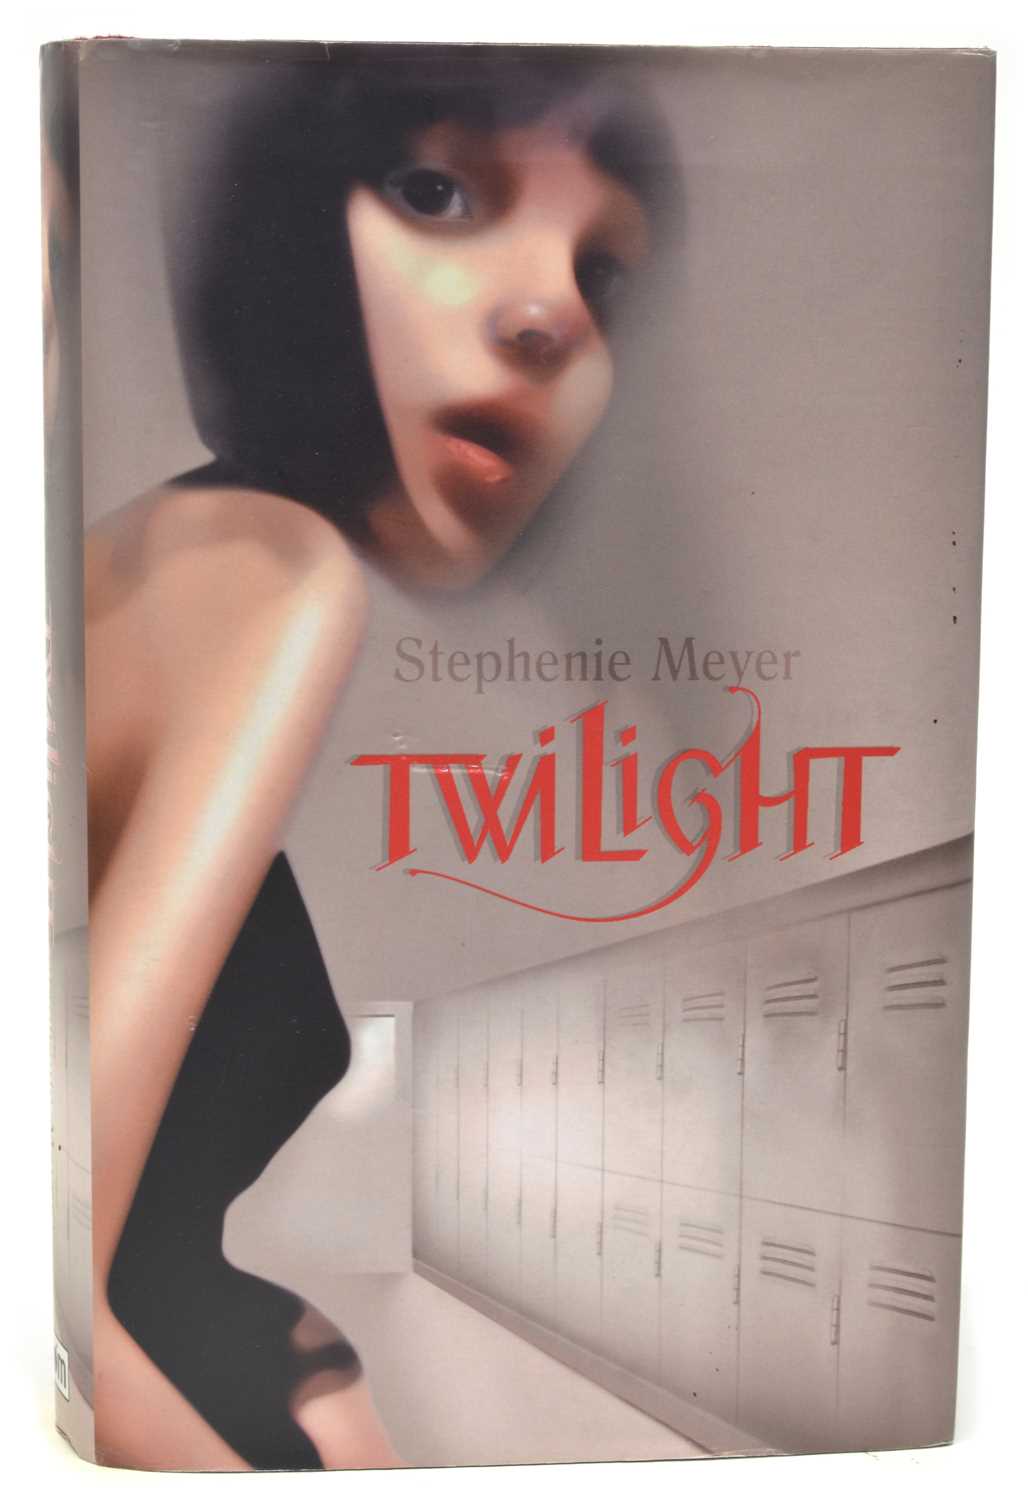 Lot 44 - Twilight